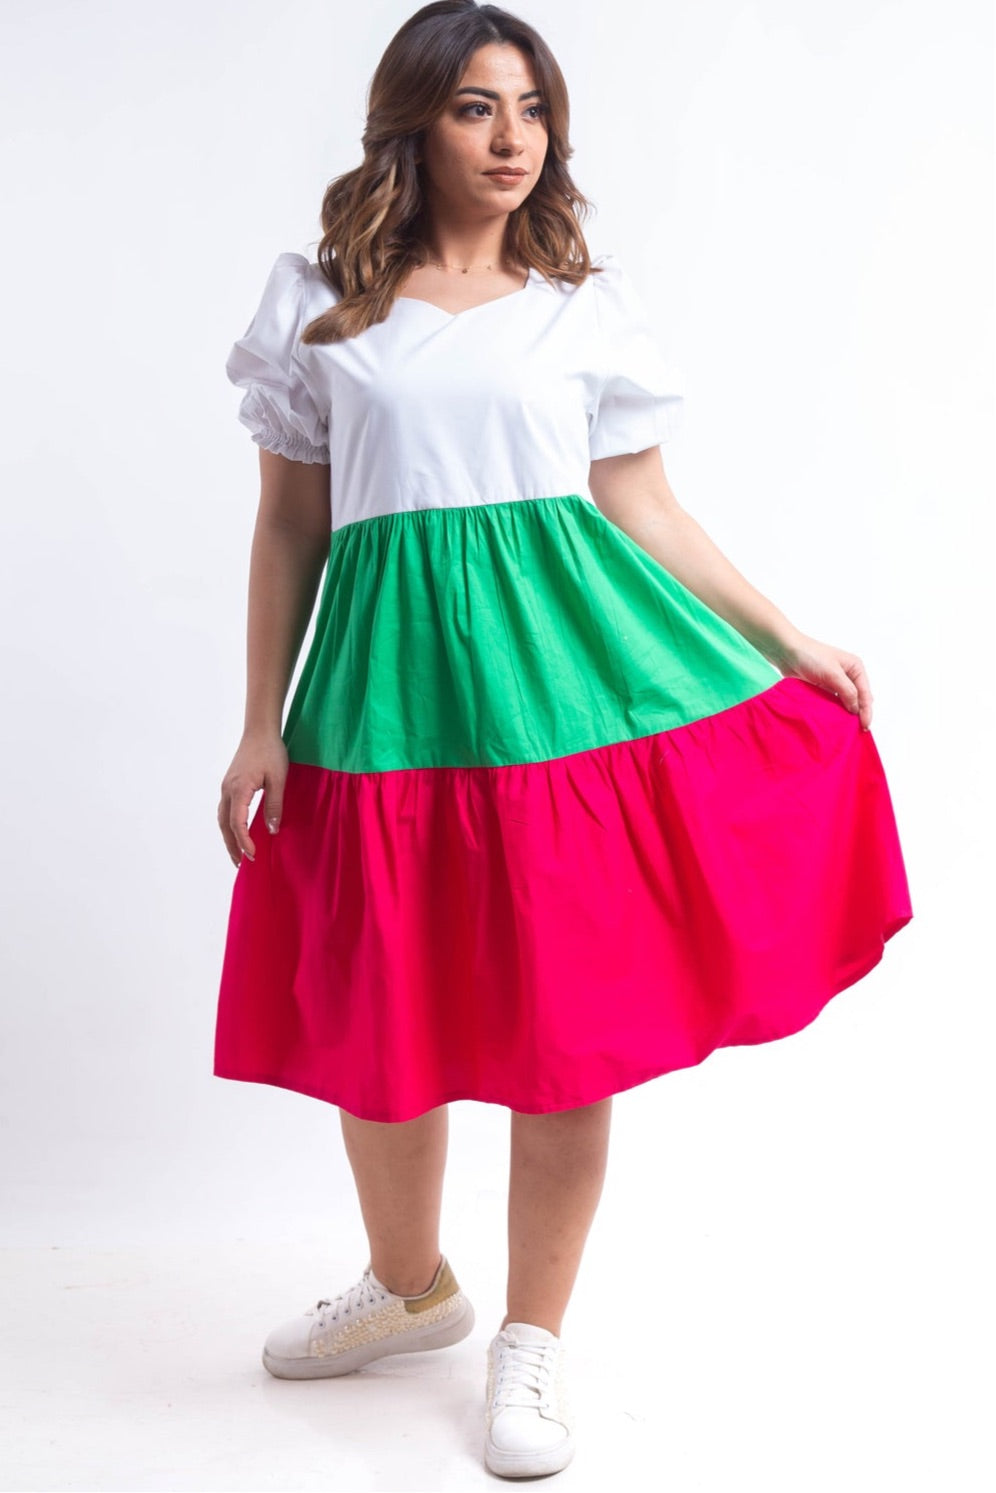 The Lolitta Summer Dress - Fushcia